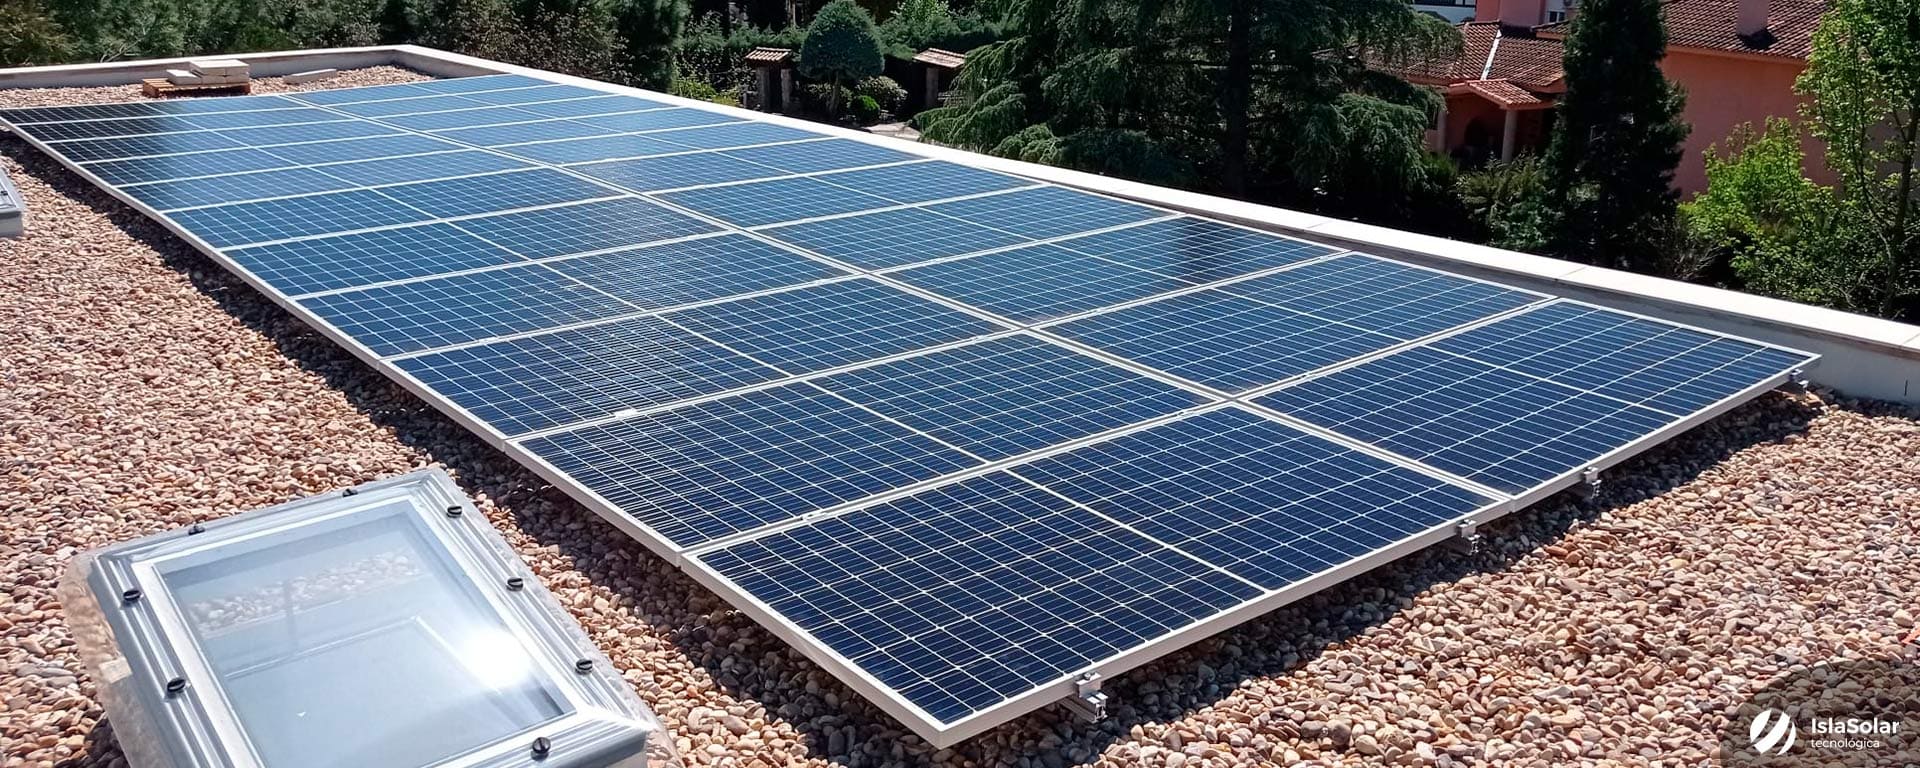 autoconsumo-fotovoltaico-residencial-las-rozas-madrid-jpg